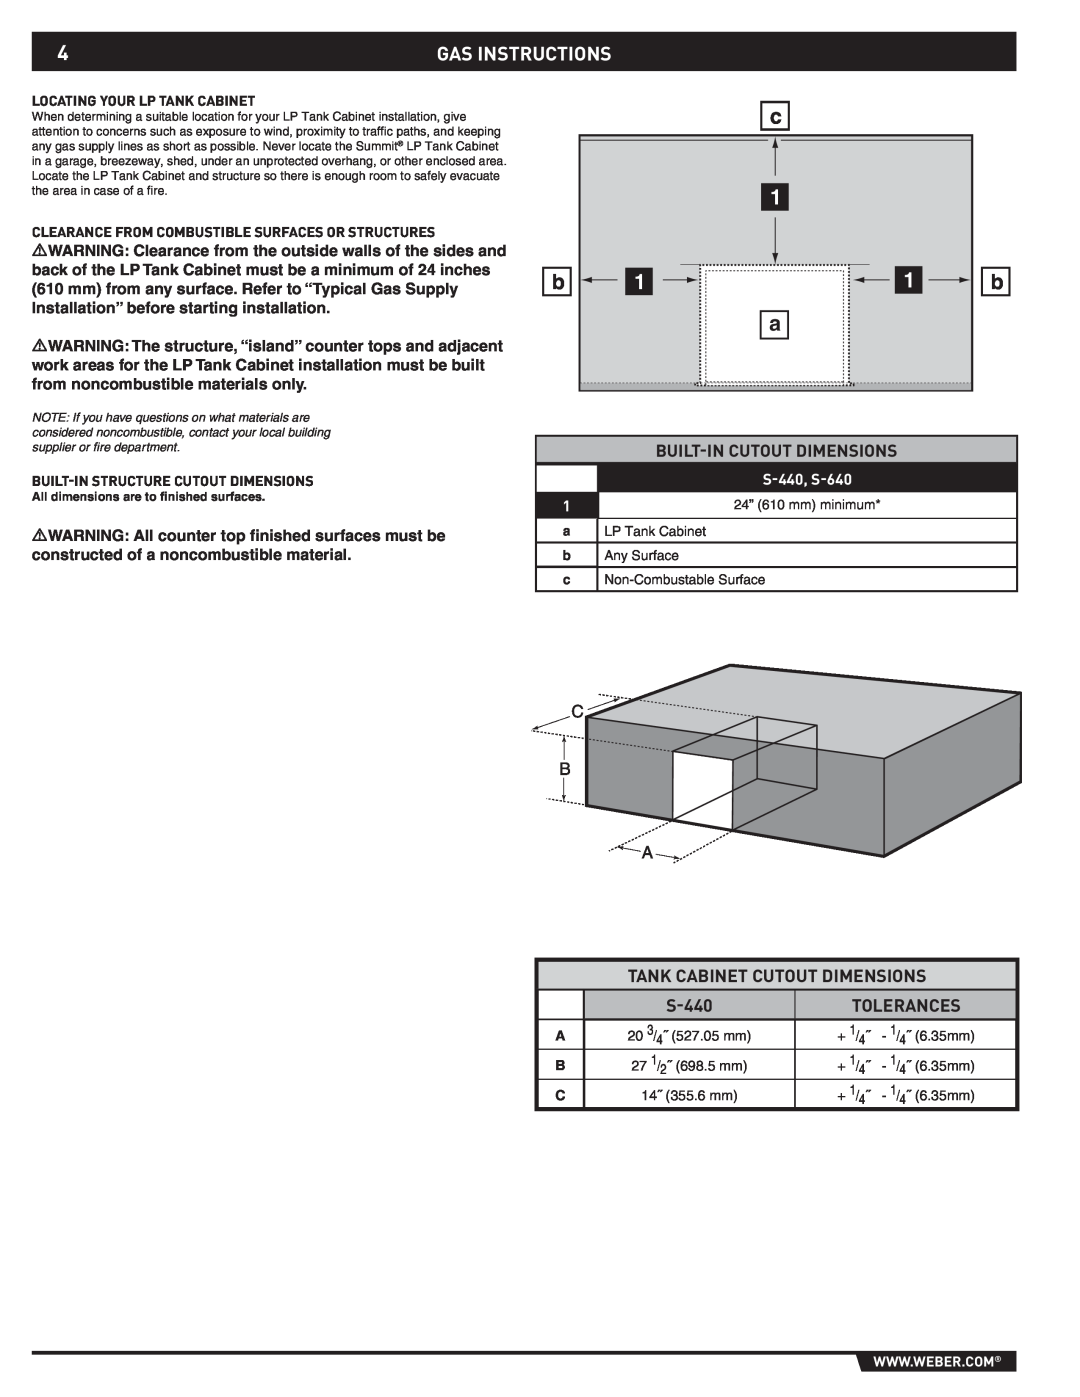 Summit 43176 Gas Instructions, Built-Incutout Dimensions, Tank Cabinet Cutout Dimensions, Tolerances, S-440, S-640 